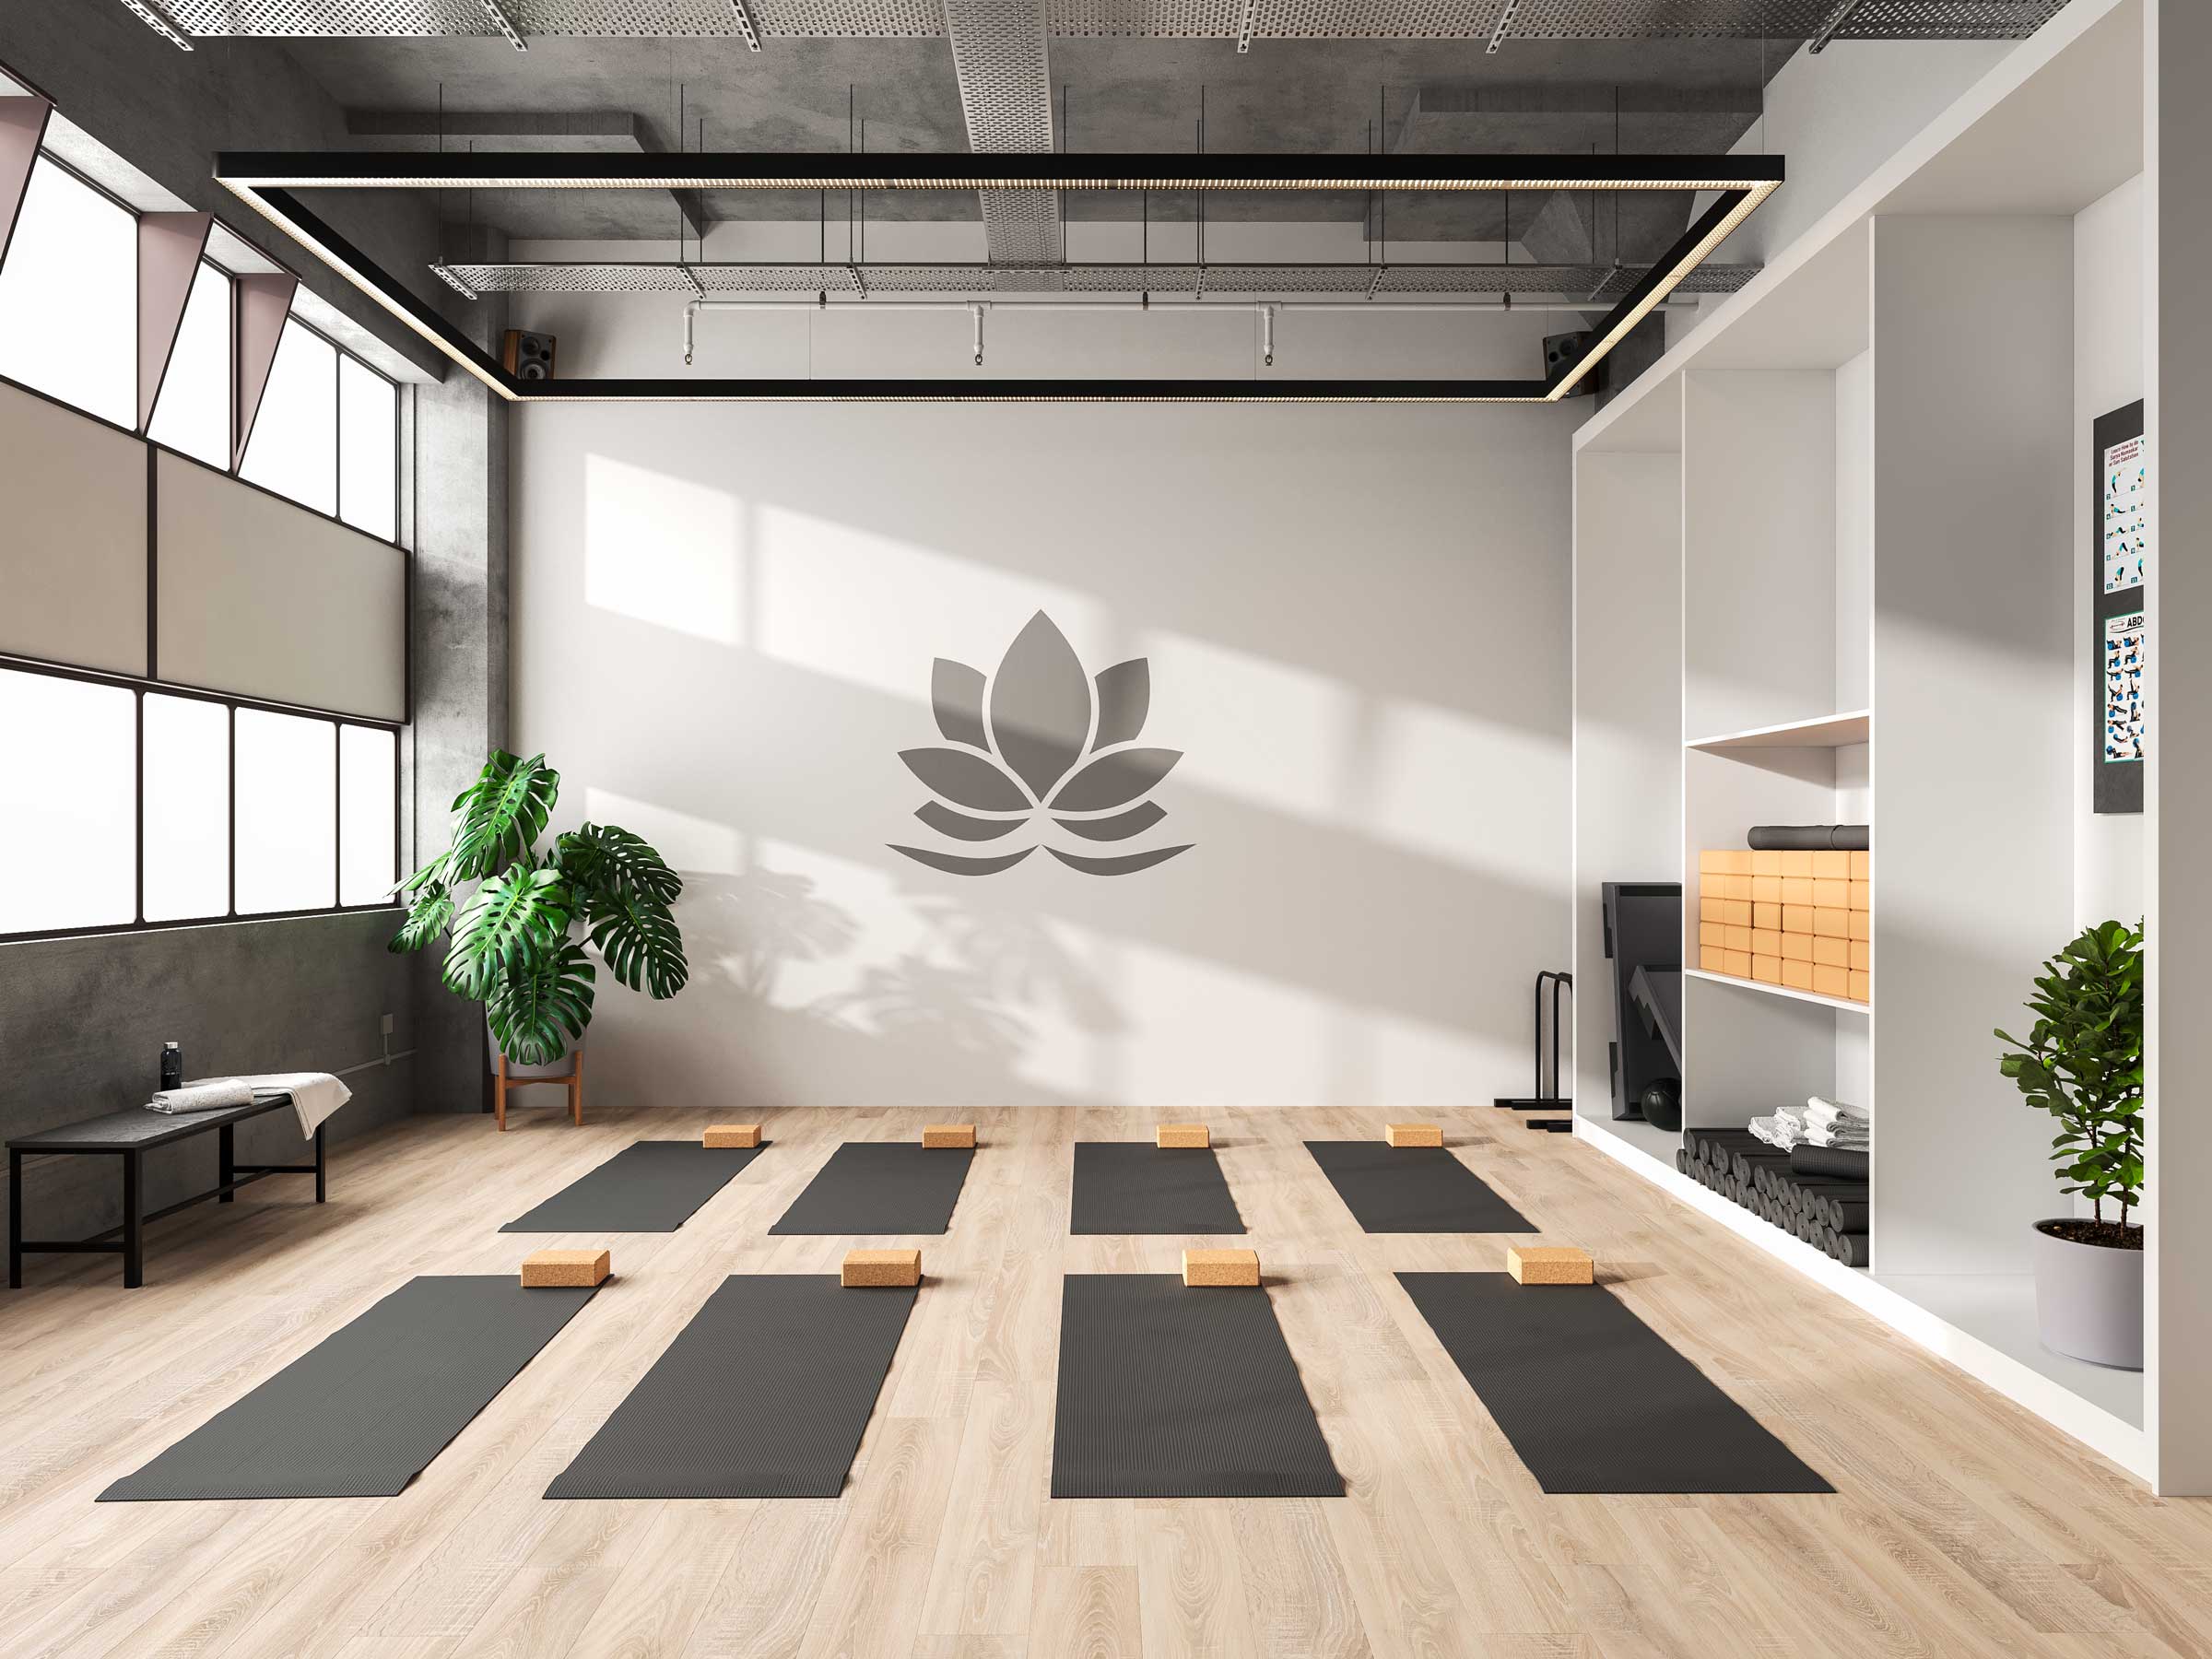 purpose-group-yoga-studio-image